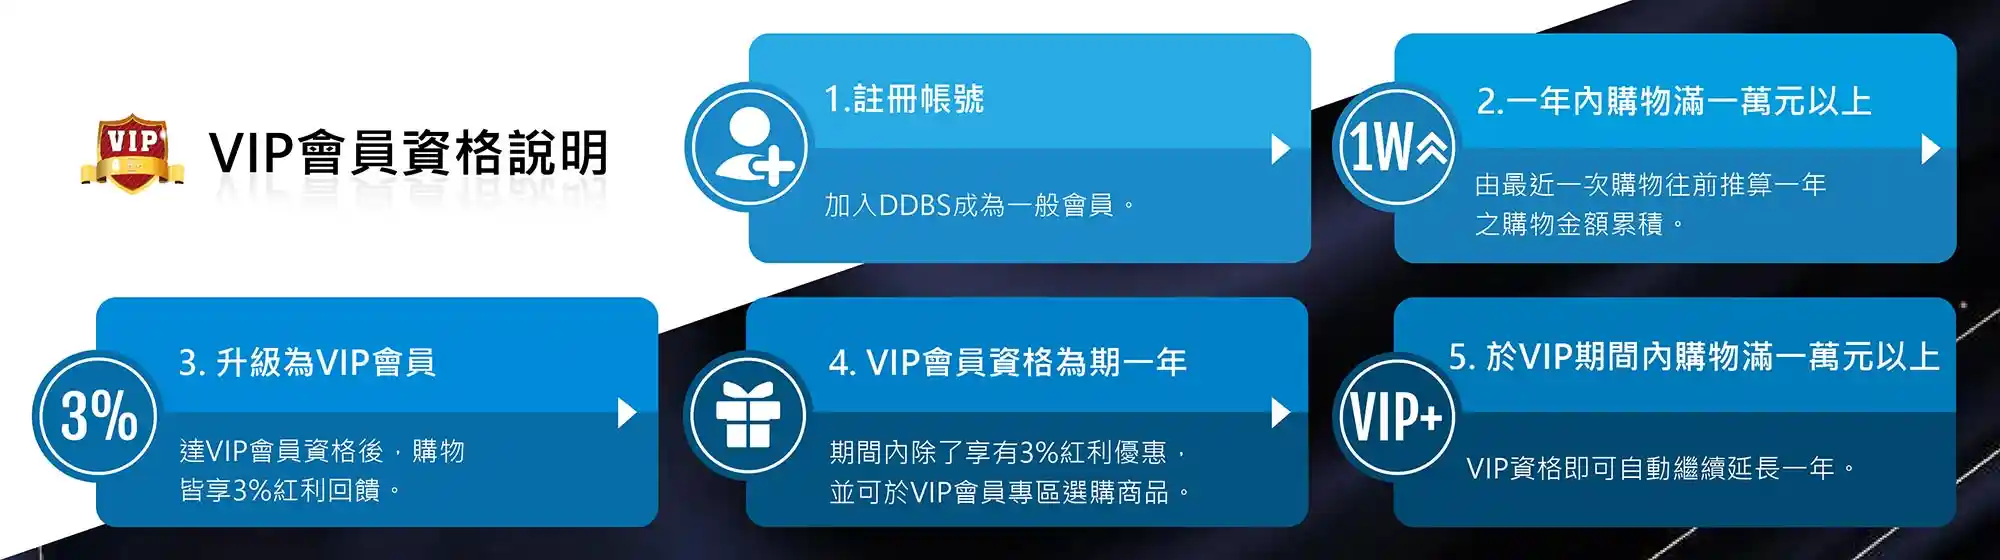 VIP會員資格說明